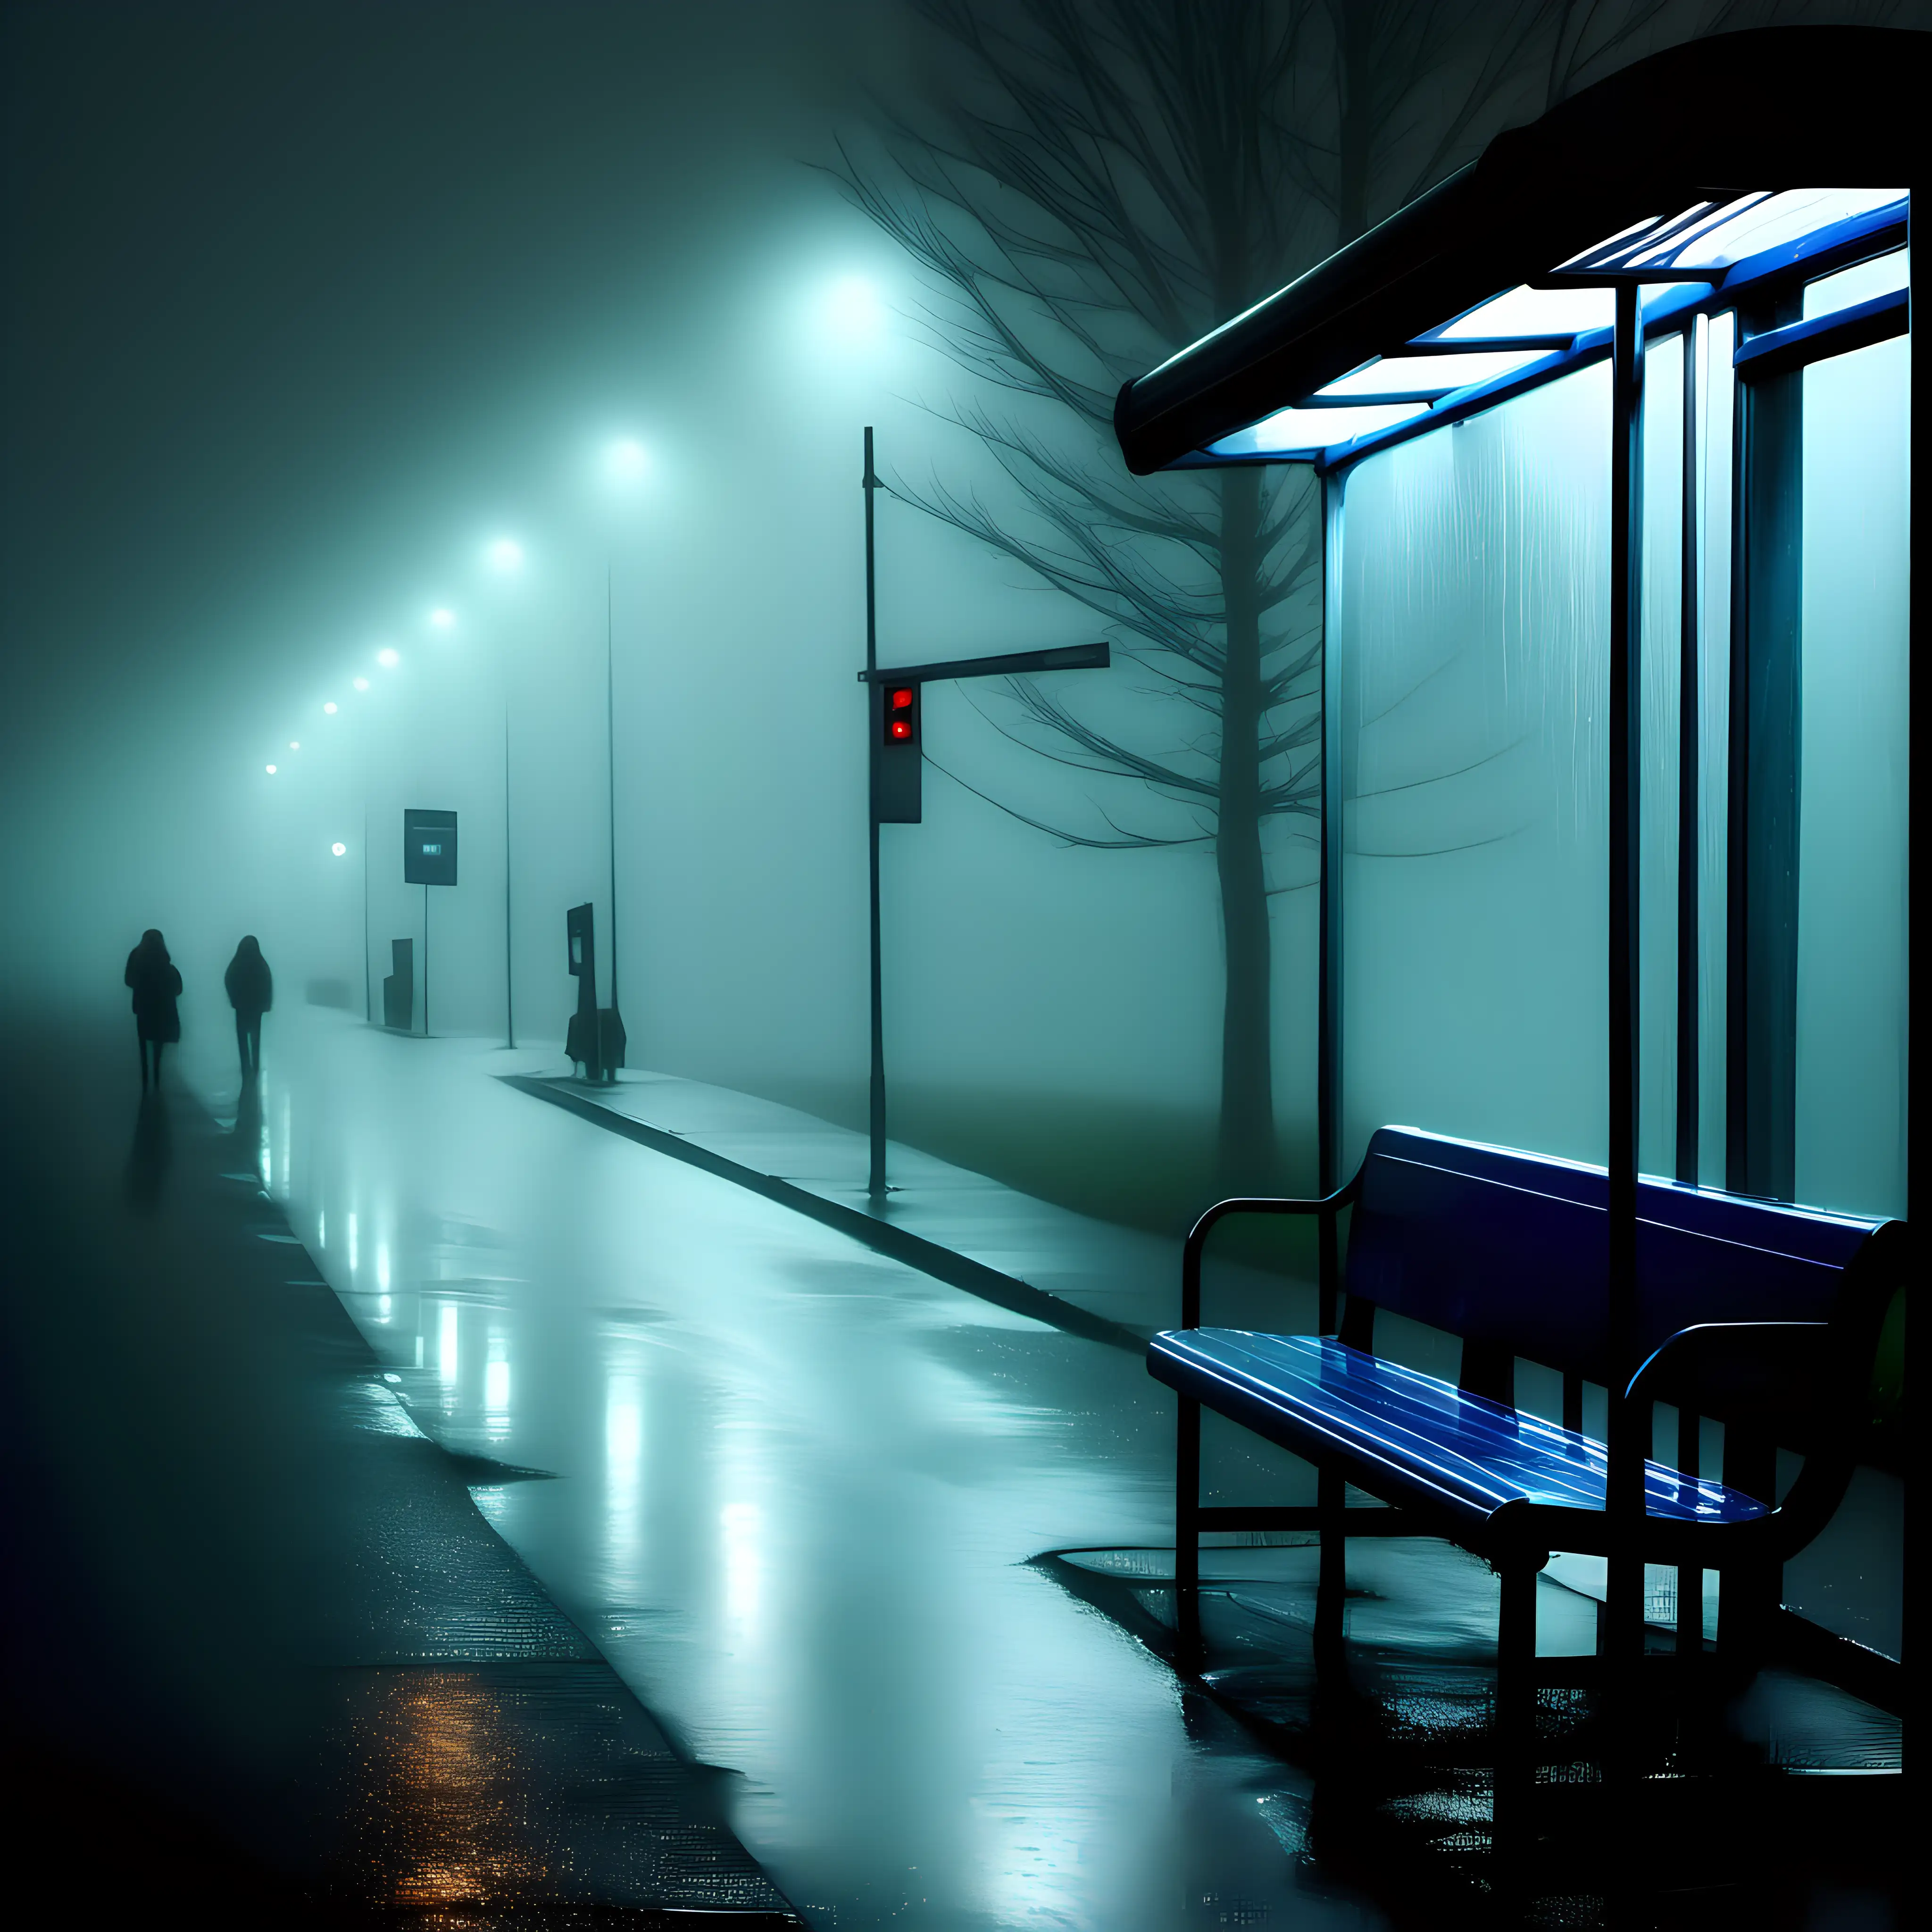 Bus stop dense fog soft light darkness passenger waiting rain